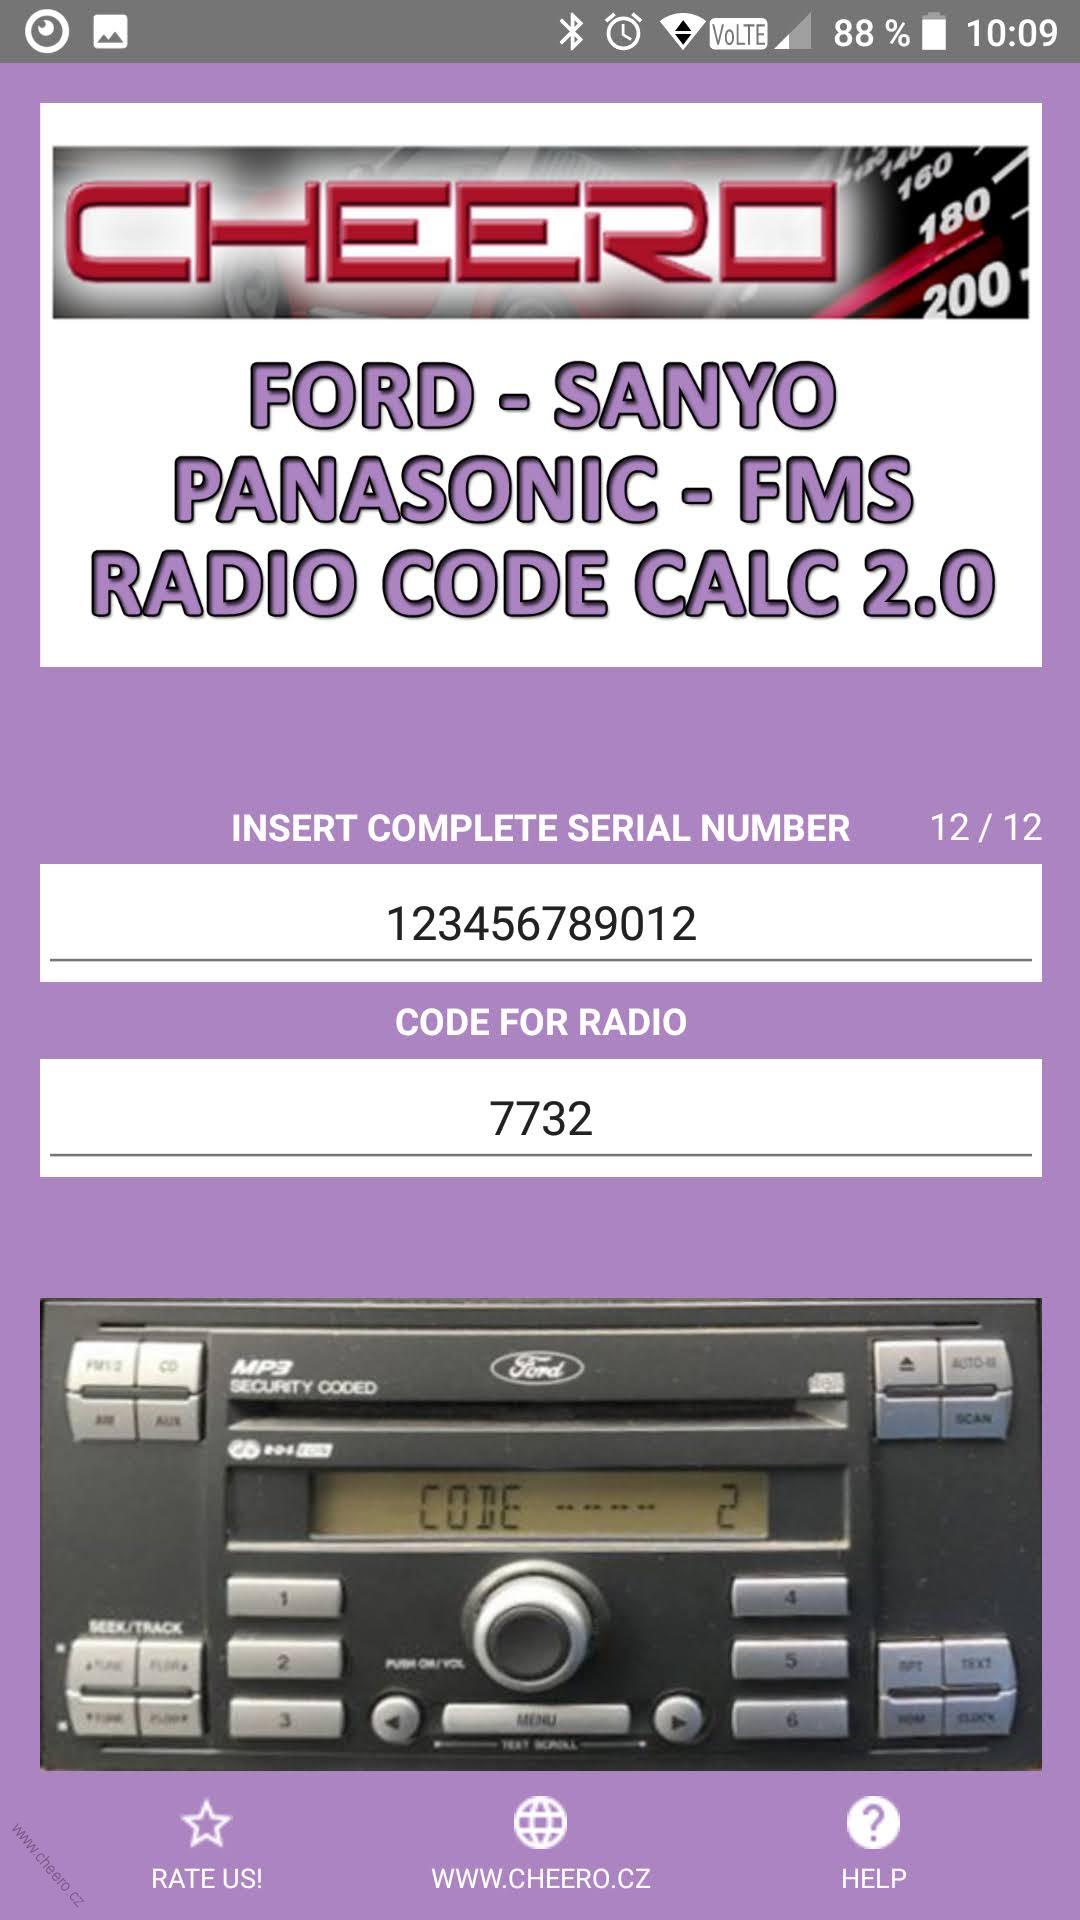 FORD - SANYO PANASONIC FMS - MEXICO INDIA - RADIO CODE CALC